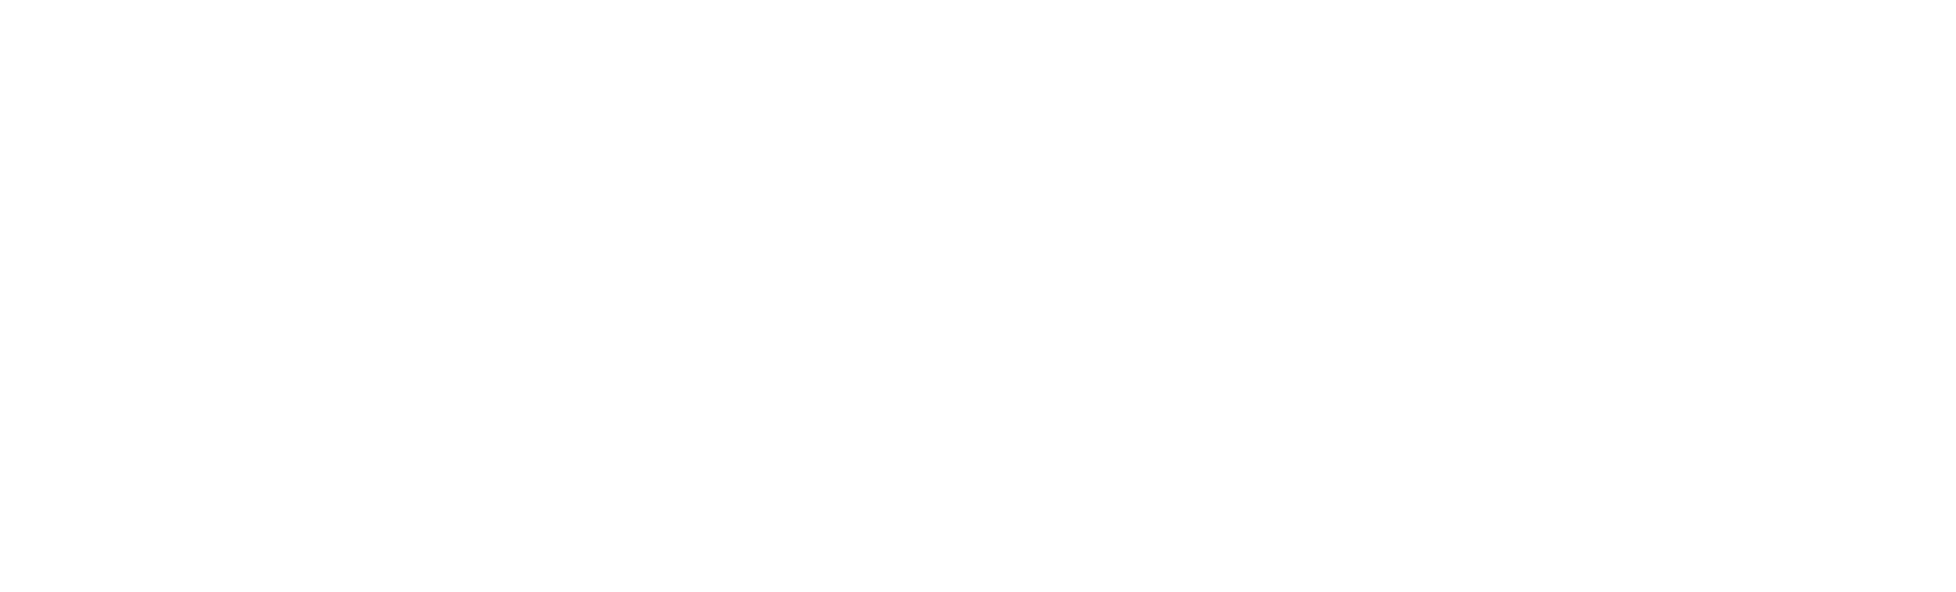 Pre Order Final Fantasy VII Rebirth - Deluxe Edition (PS5) - Forestals